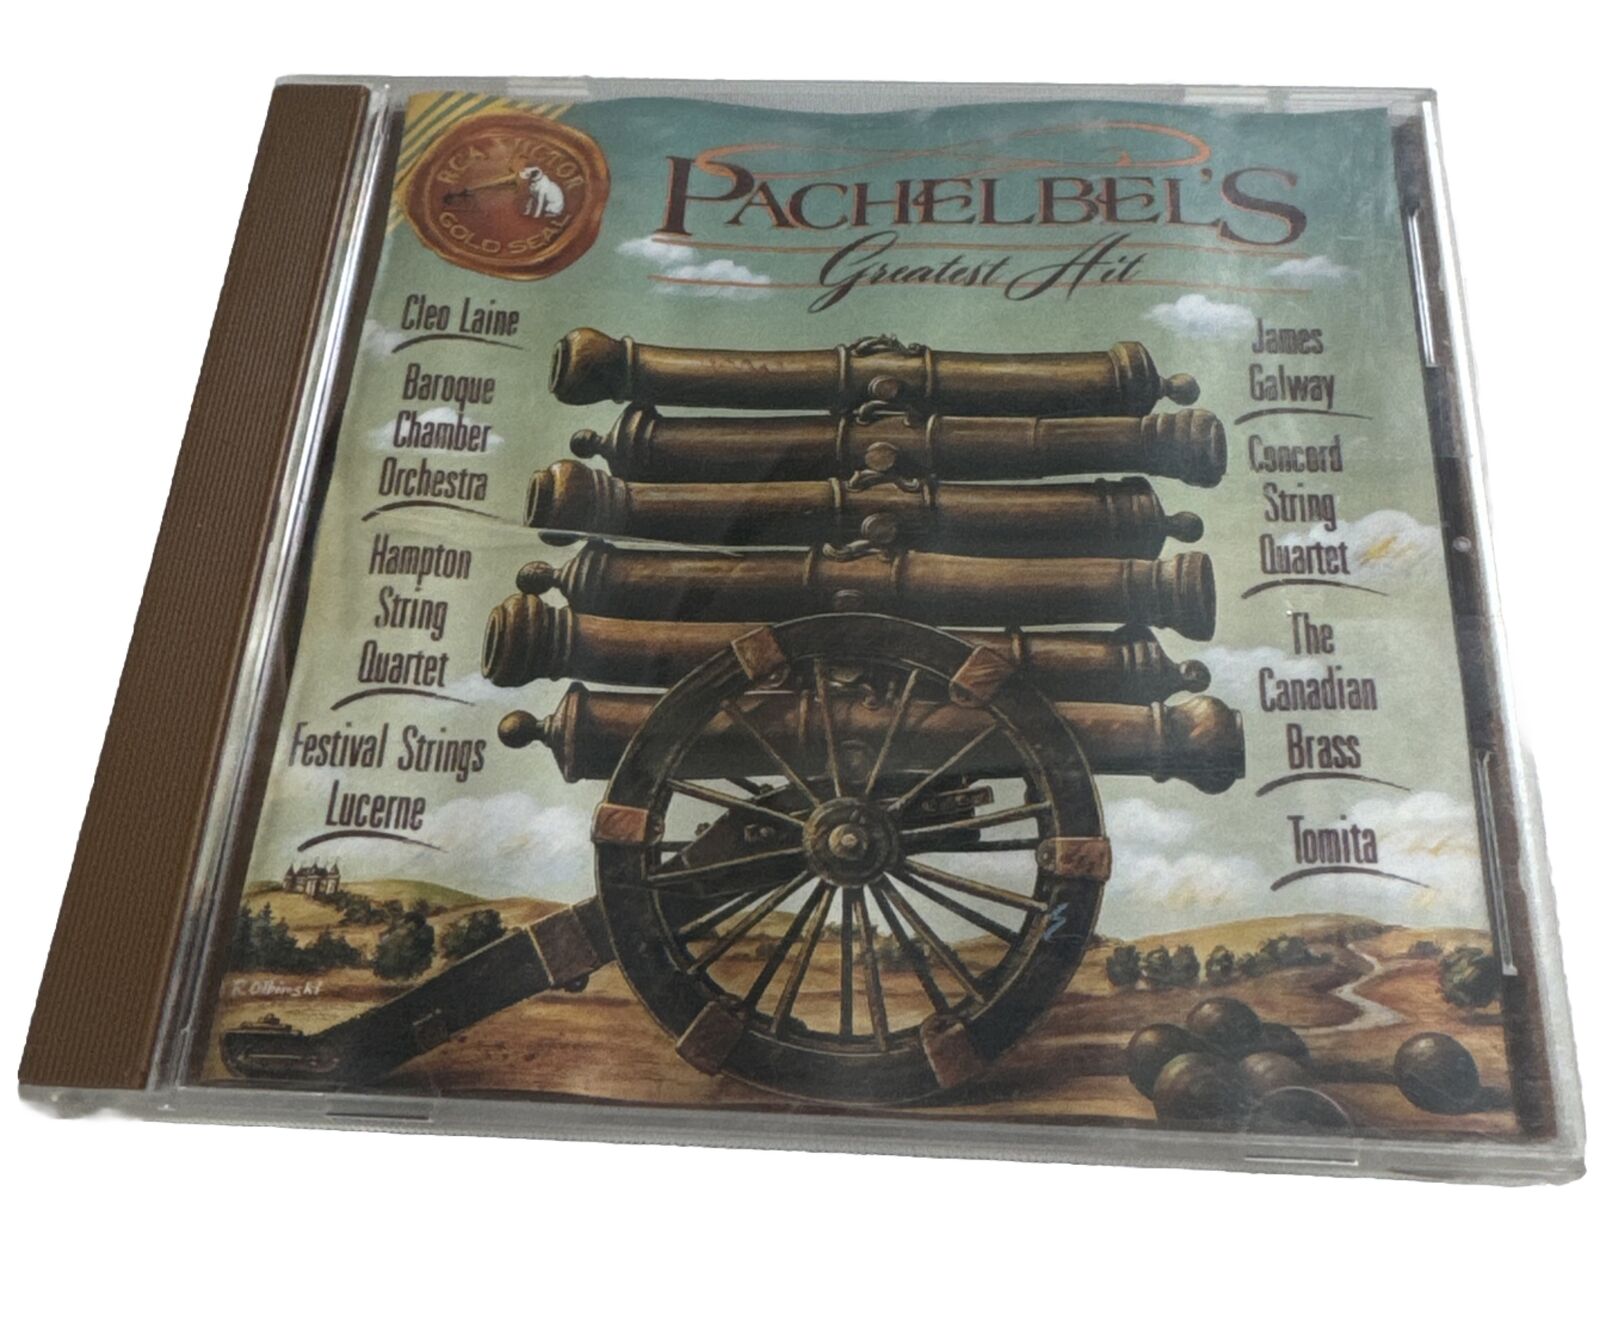 Pachelbel\'s Greatest Hits by J. Pachelbel (CD, 1991, BMG)